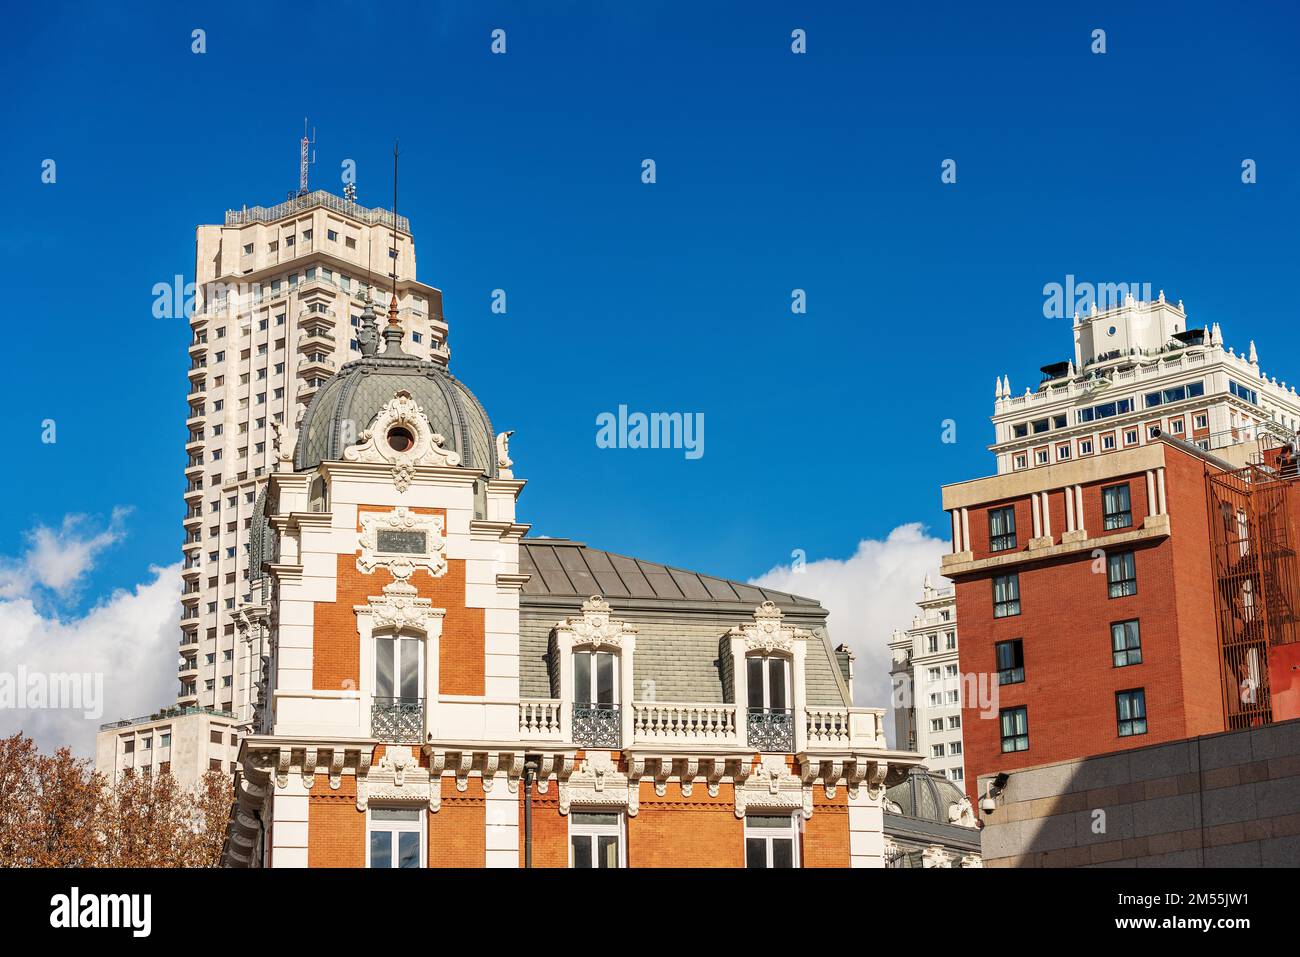 Plaza de Espana (Spain Square), building of the Belgian Royal Asturian Company of Mines, 1899, designed by Manuel Martinez Angel. Madrid, Spain. Stock Photo